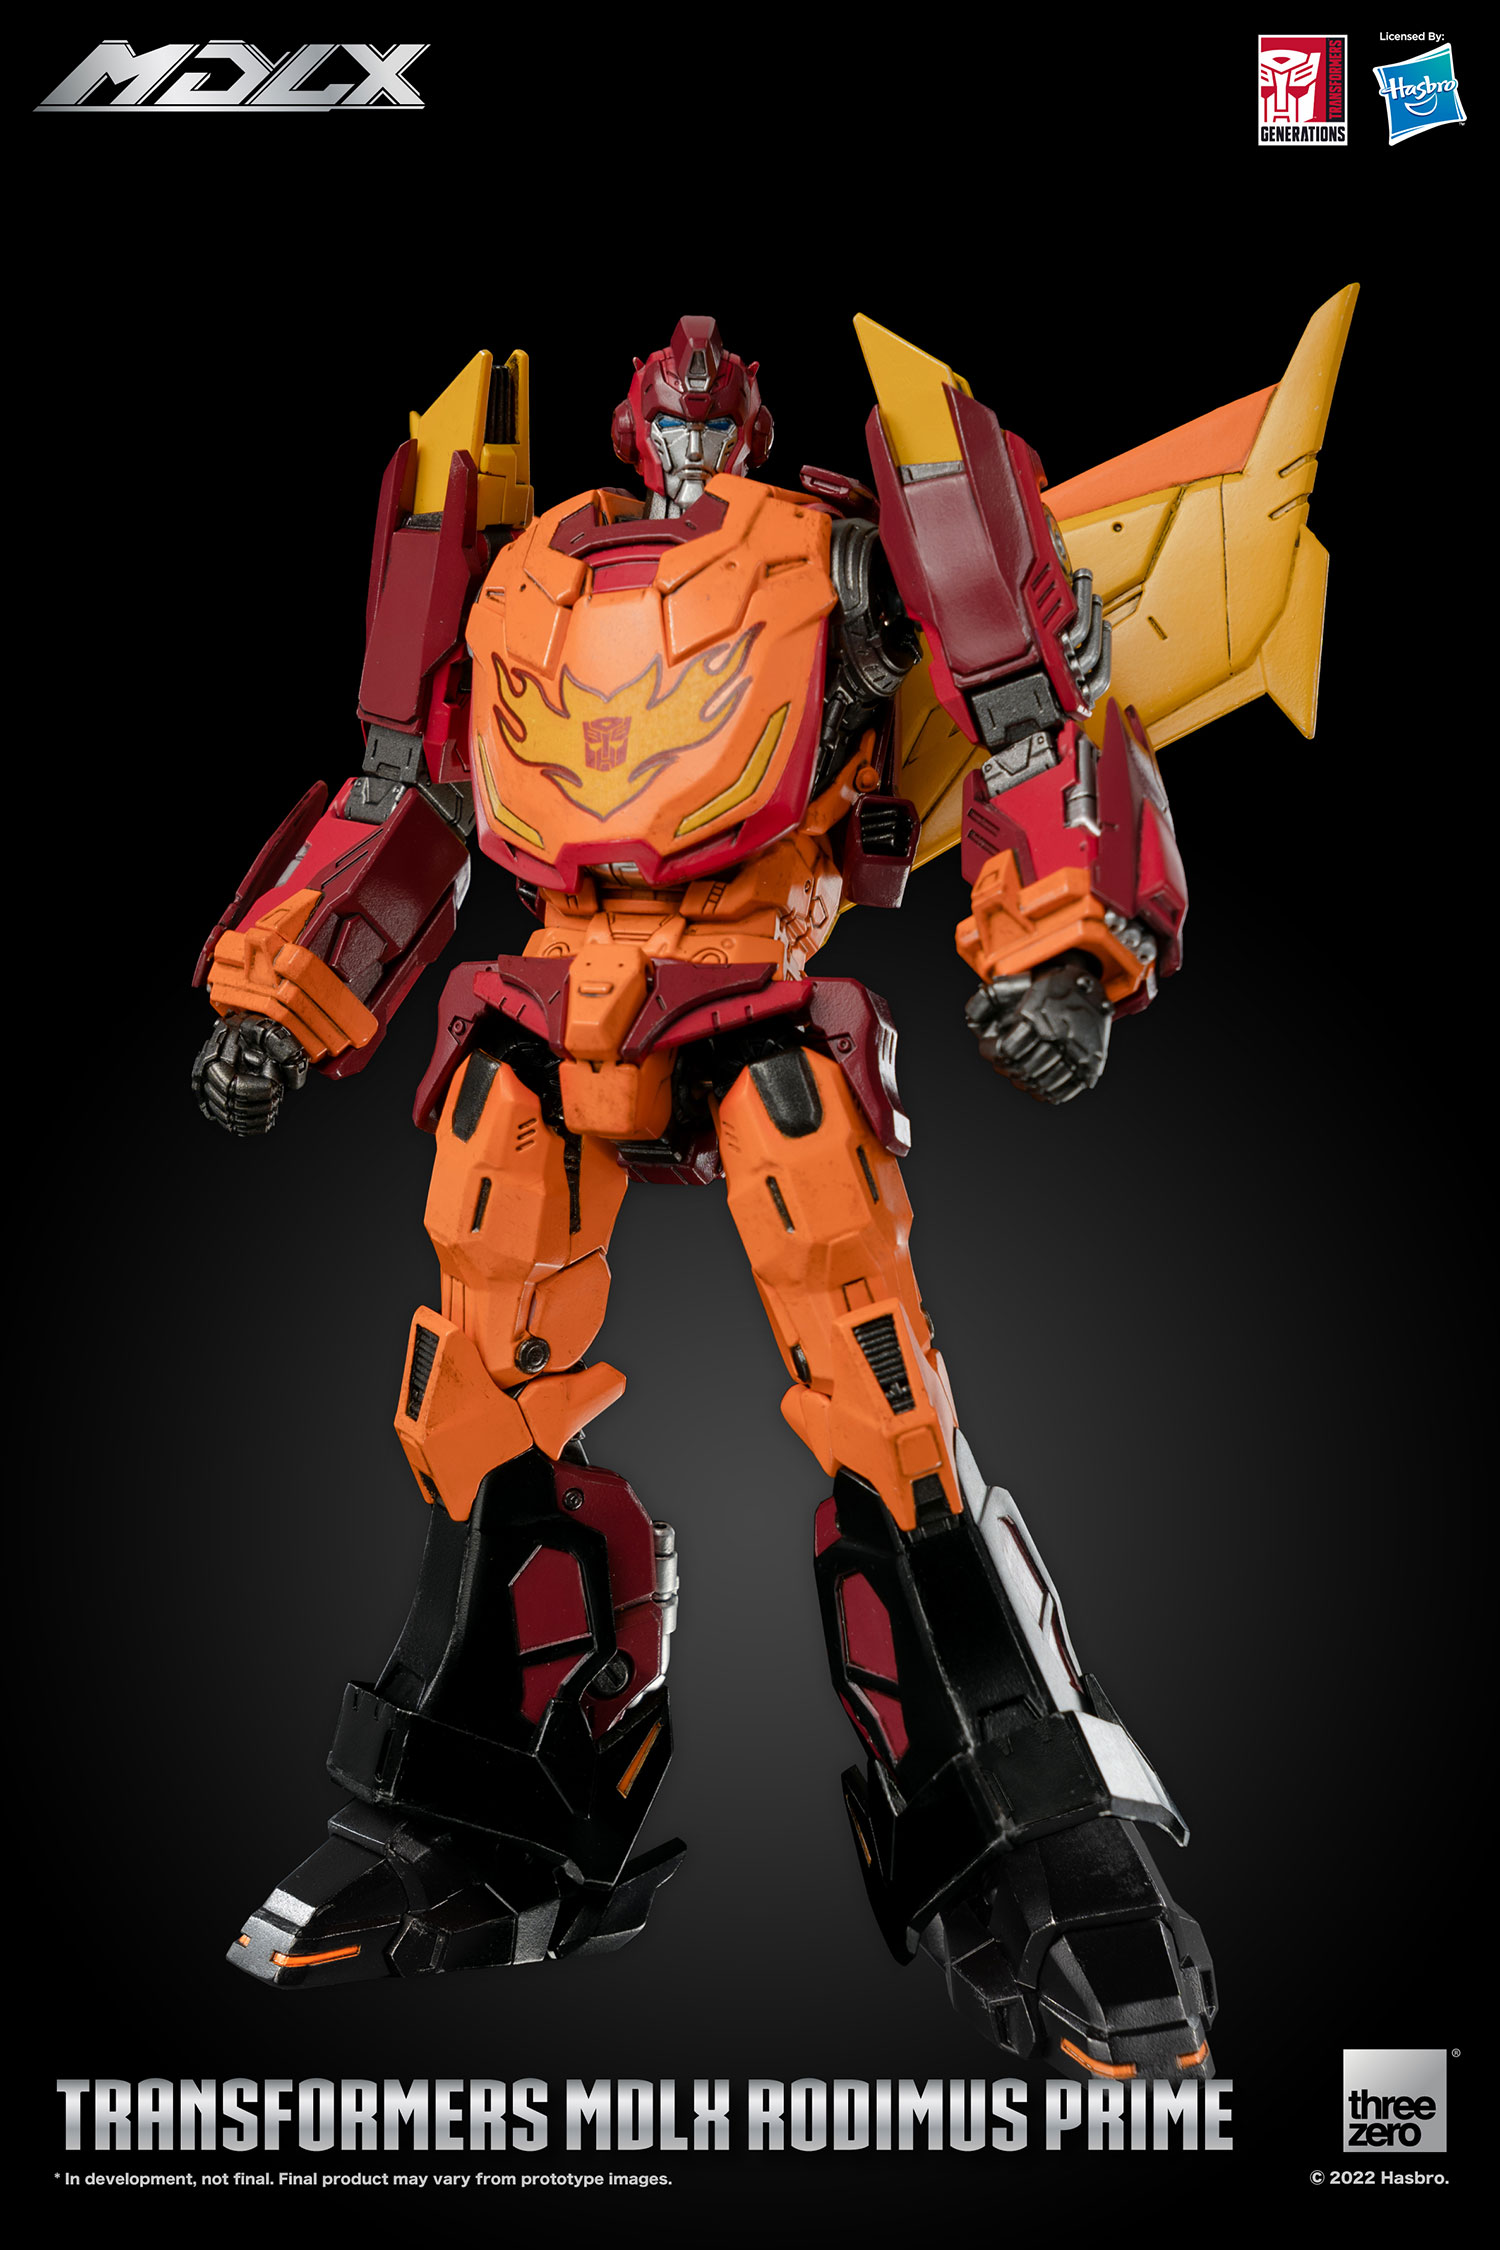 Transformers MDLX Collectible Figure Optimus Prime(トランスフォーマー MDLX コレクタブルフィギュア オプティマスプライム) 完成品 可動フィギュア(海外流通版) threezero(スリーゼロ)